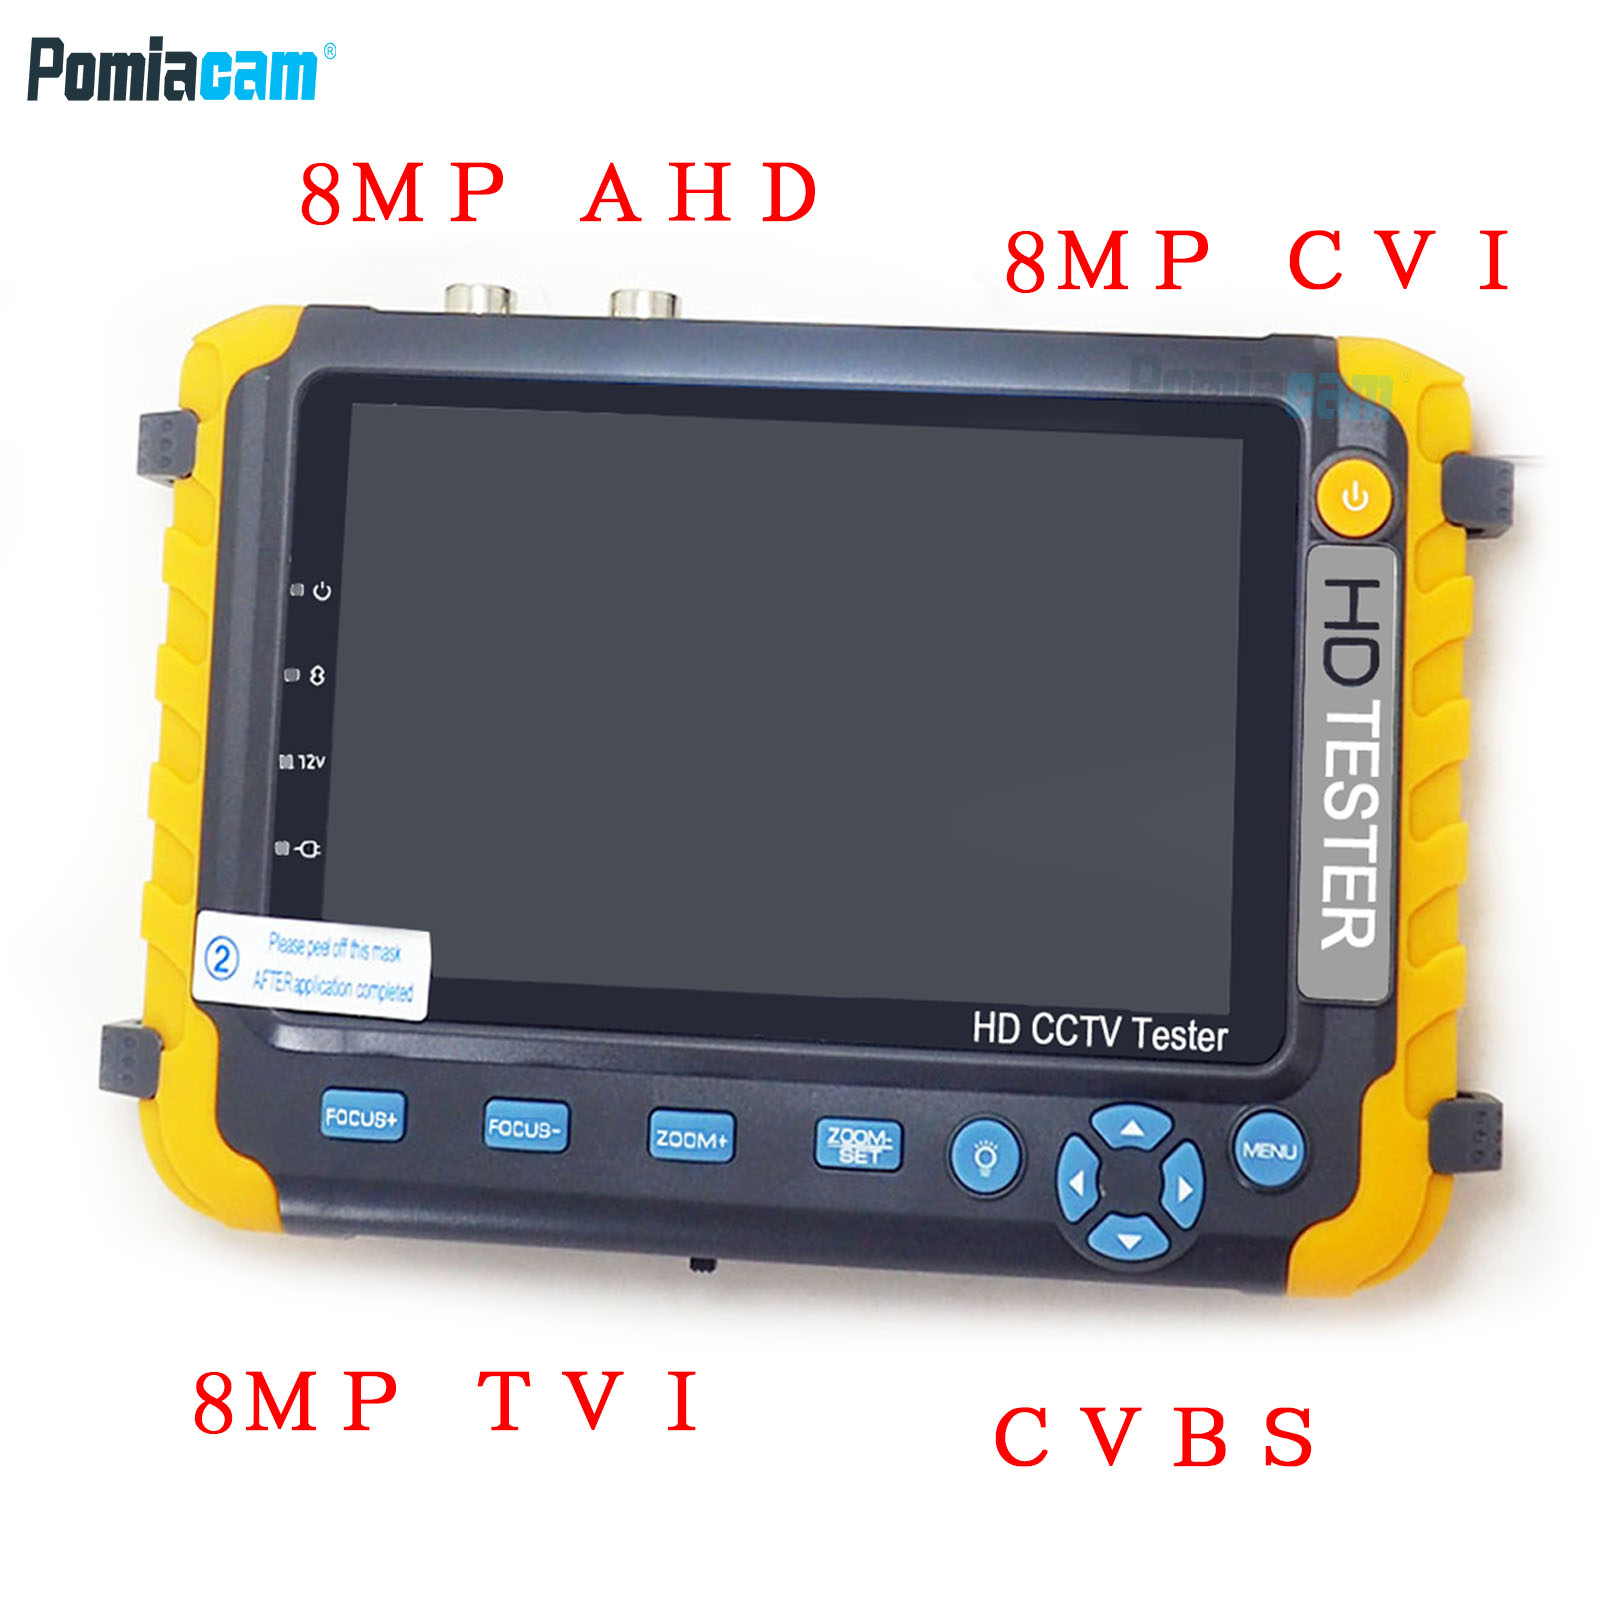 IV8W CCTV tester monitor for 8MP AHD TVI CVI CVBS camera testing RS485 PTZ control VGA HDMI input UTP Cable testing